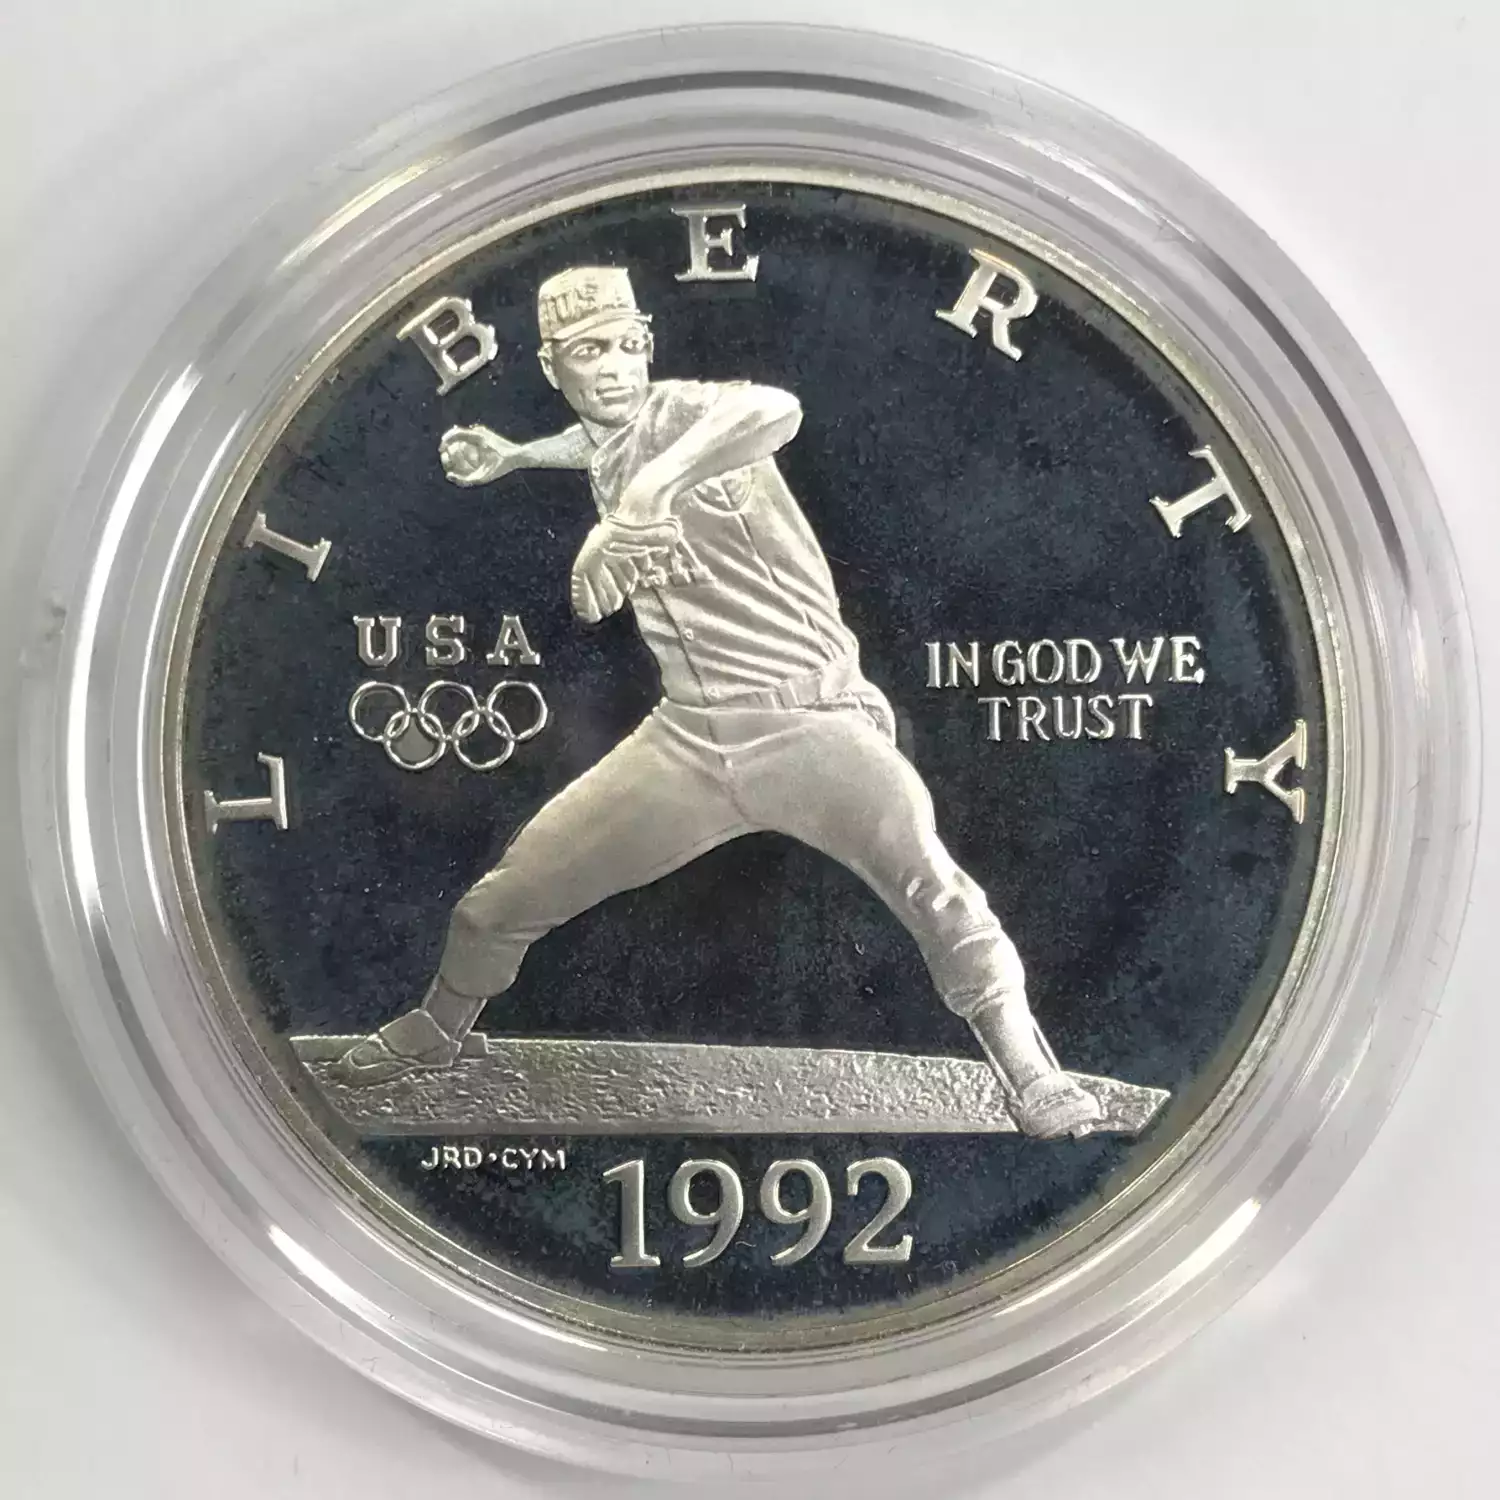 1992 Olympic Baseball & Gymnast Two-Coin Proof Set w US Mint OGP - Box & COA (6)